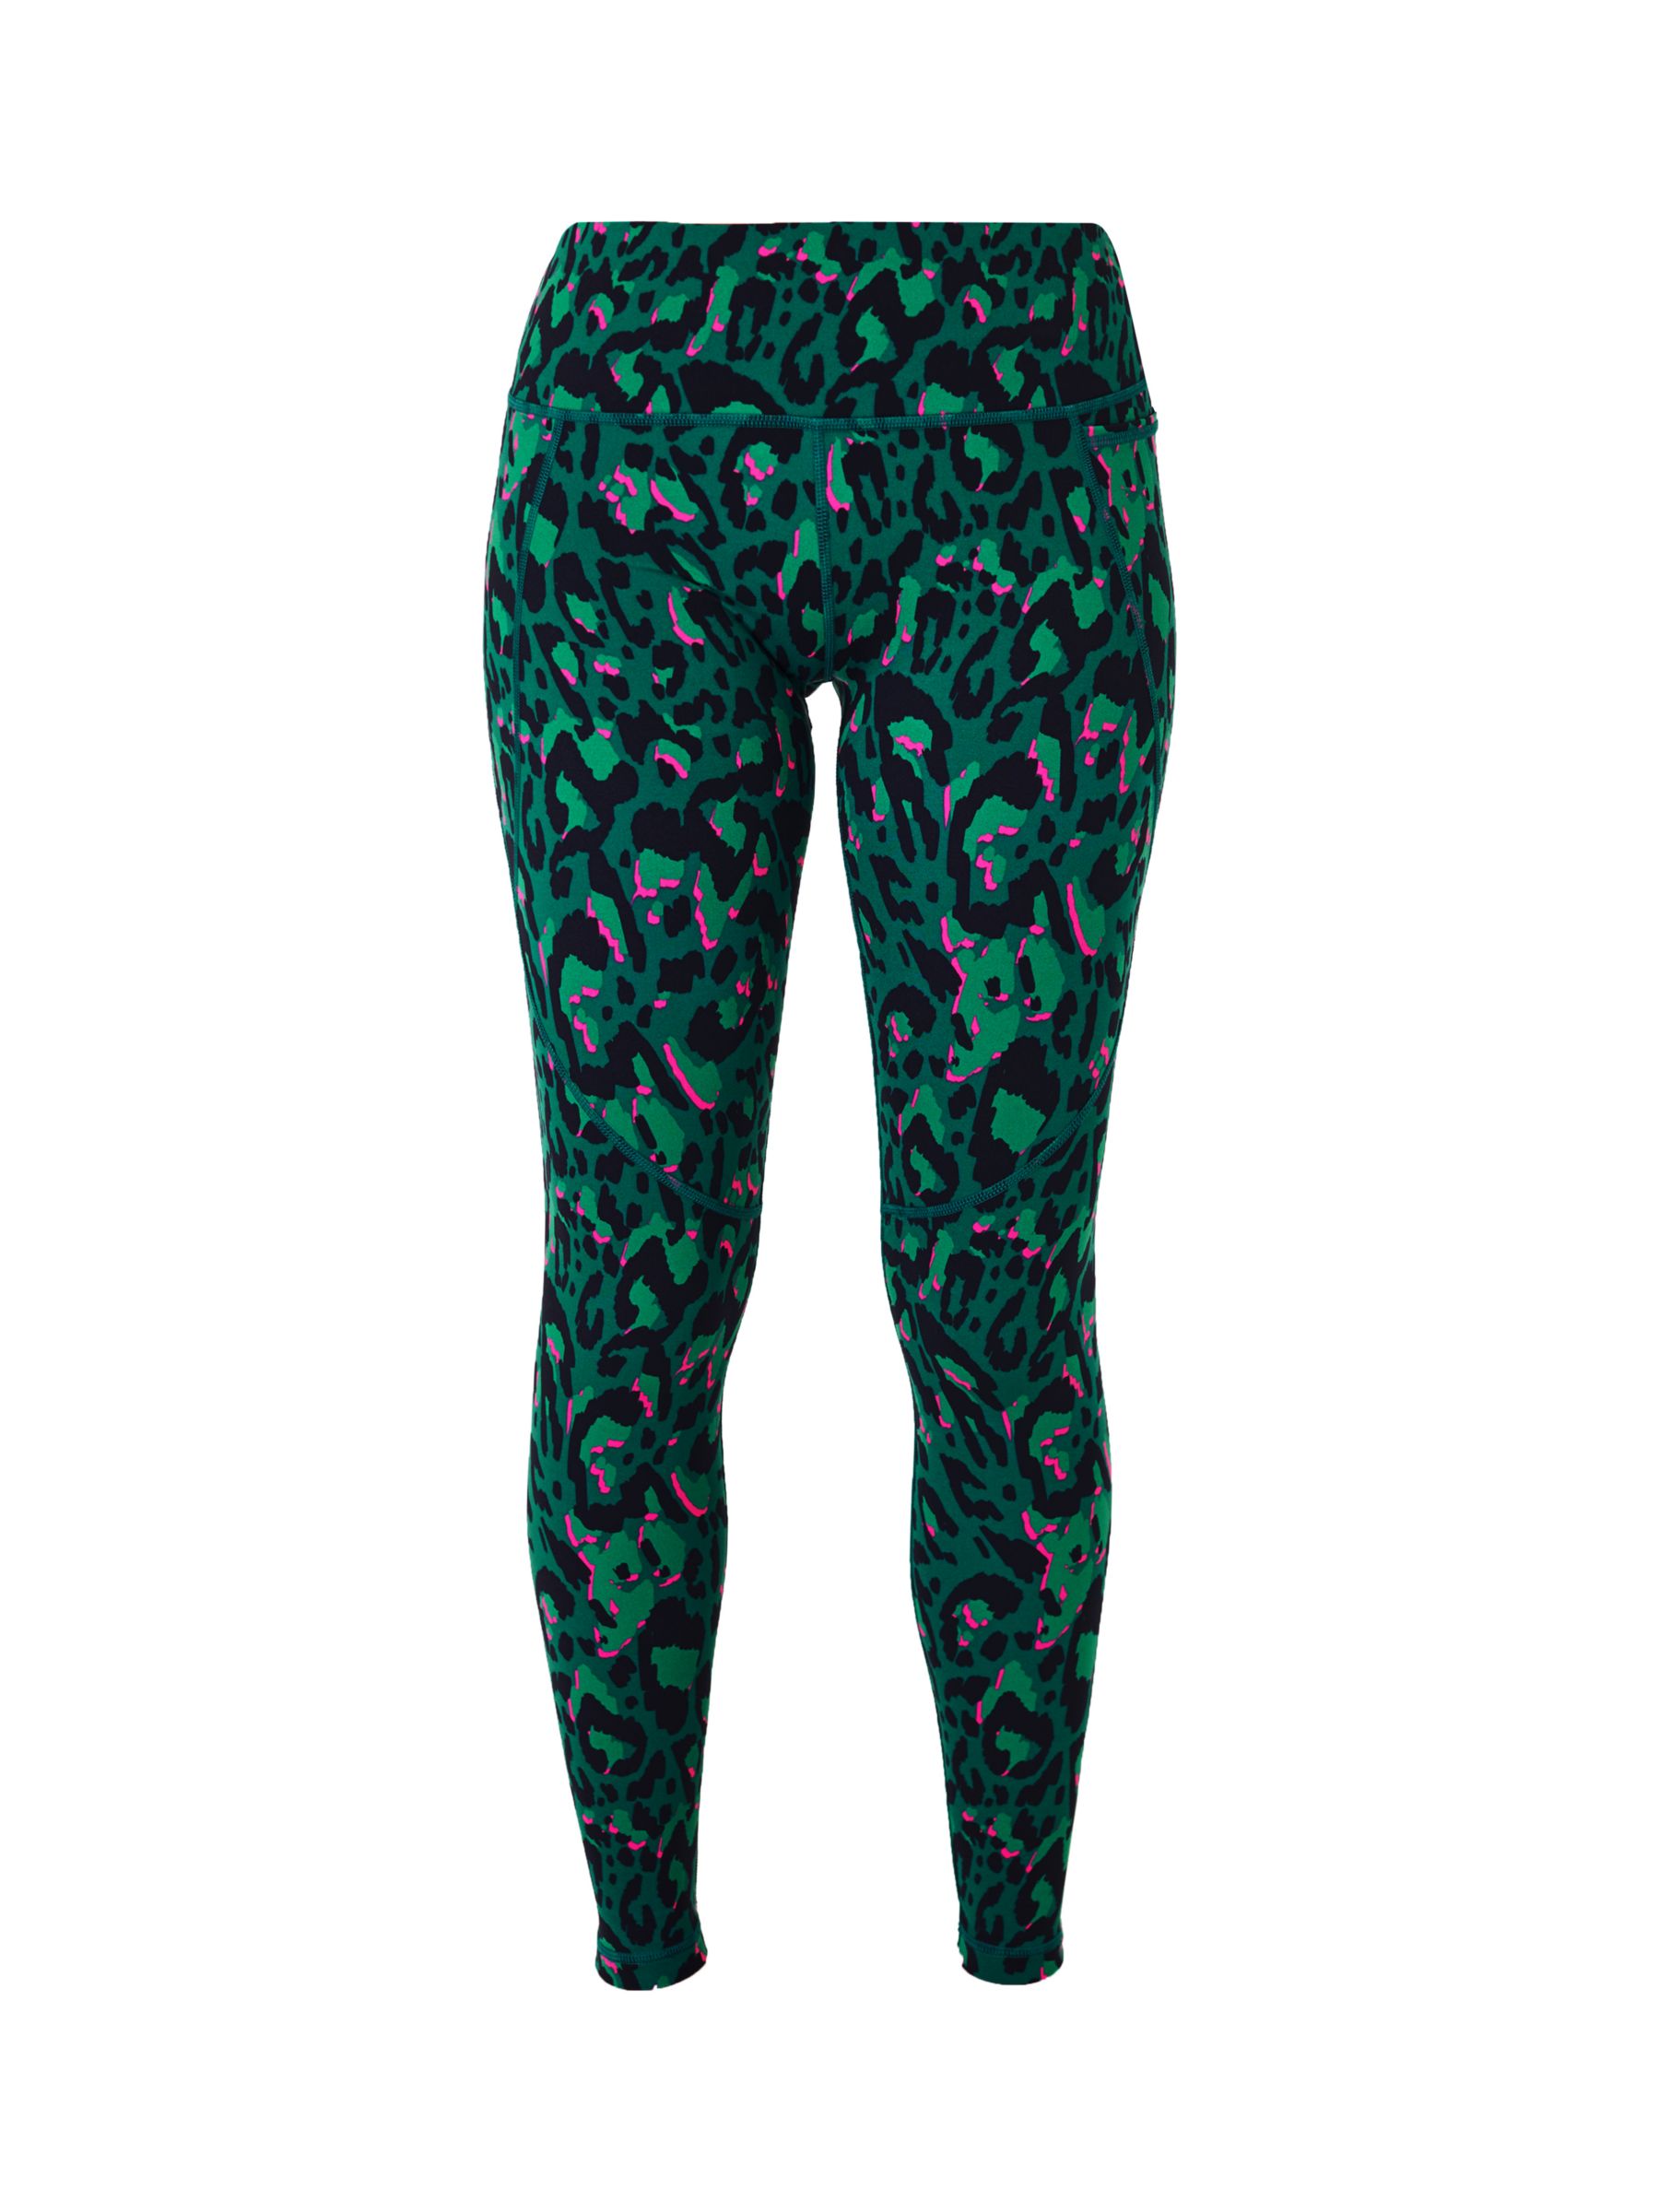 Sweaty Betty, Pants & Jumpsuits, New Sweaty Betty Leggings High Rise  Green Leopard Print Power Workout Size Small